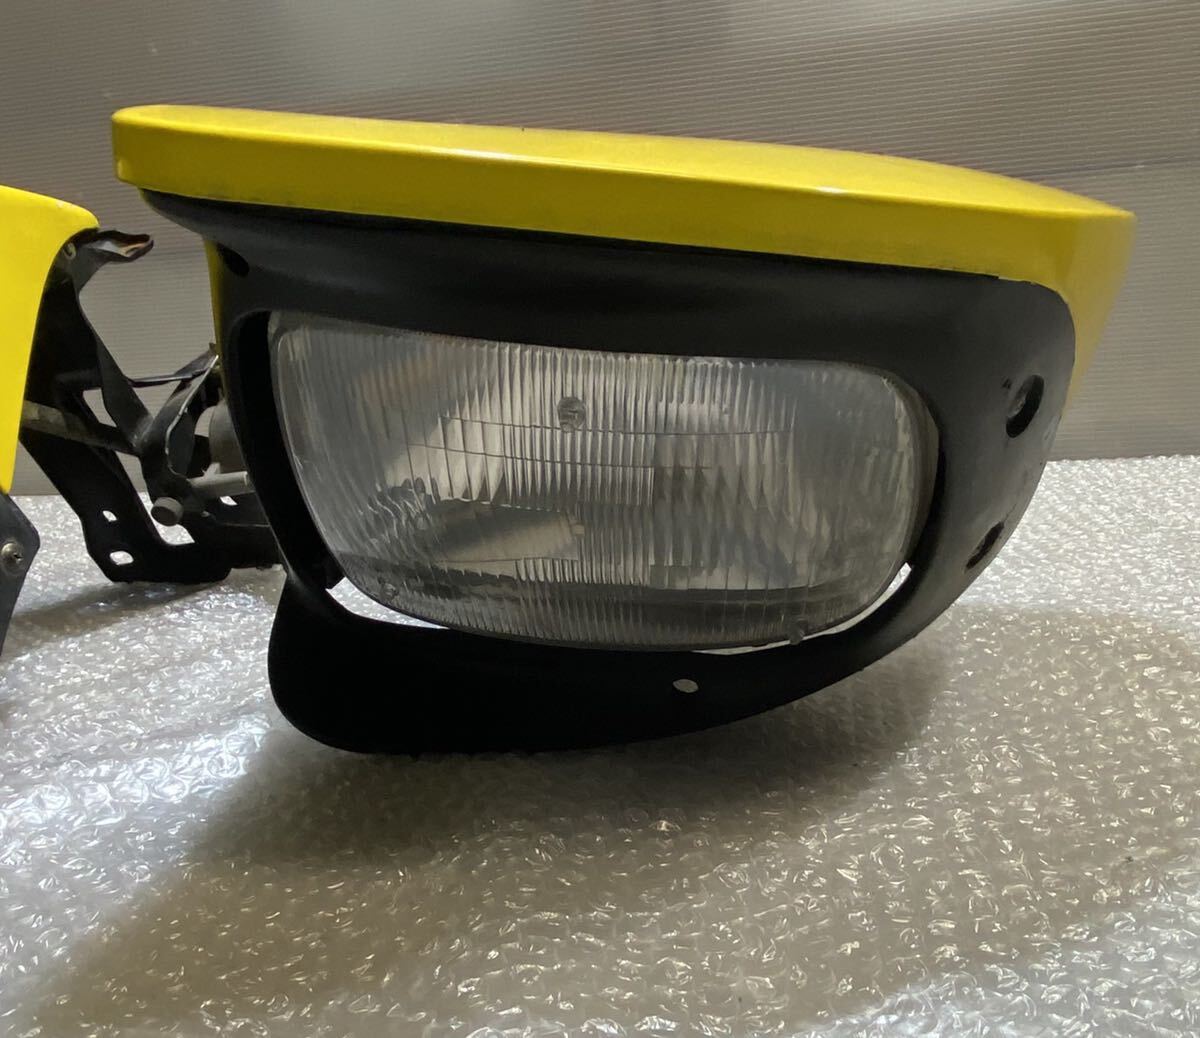  Mazda original FD3S RX-7 head light left right set headlamp with cover 